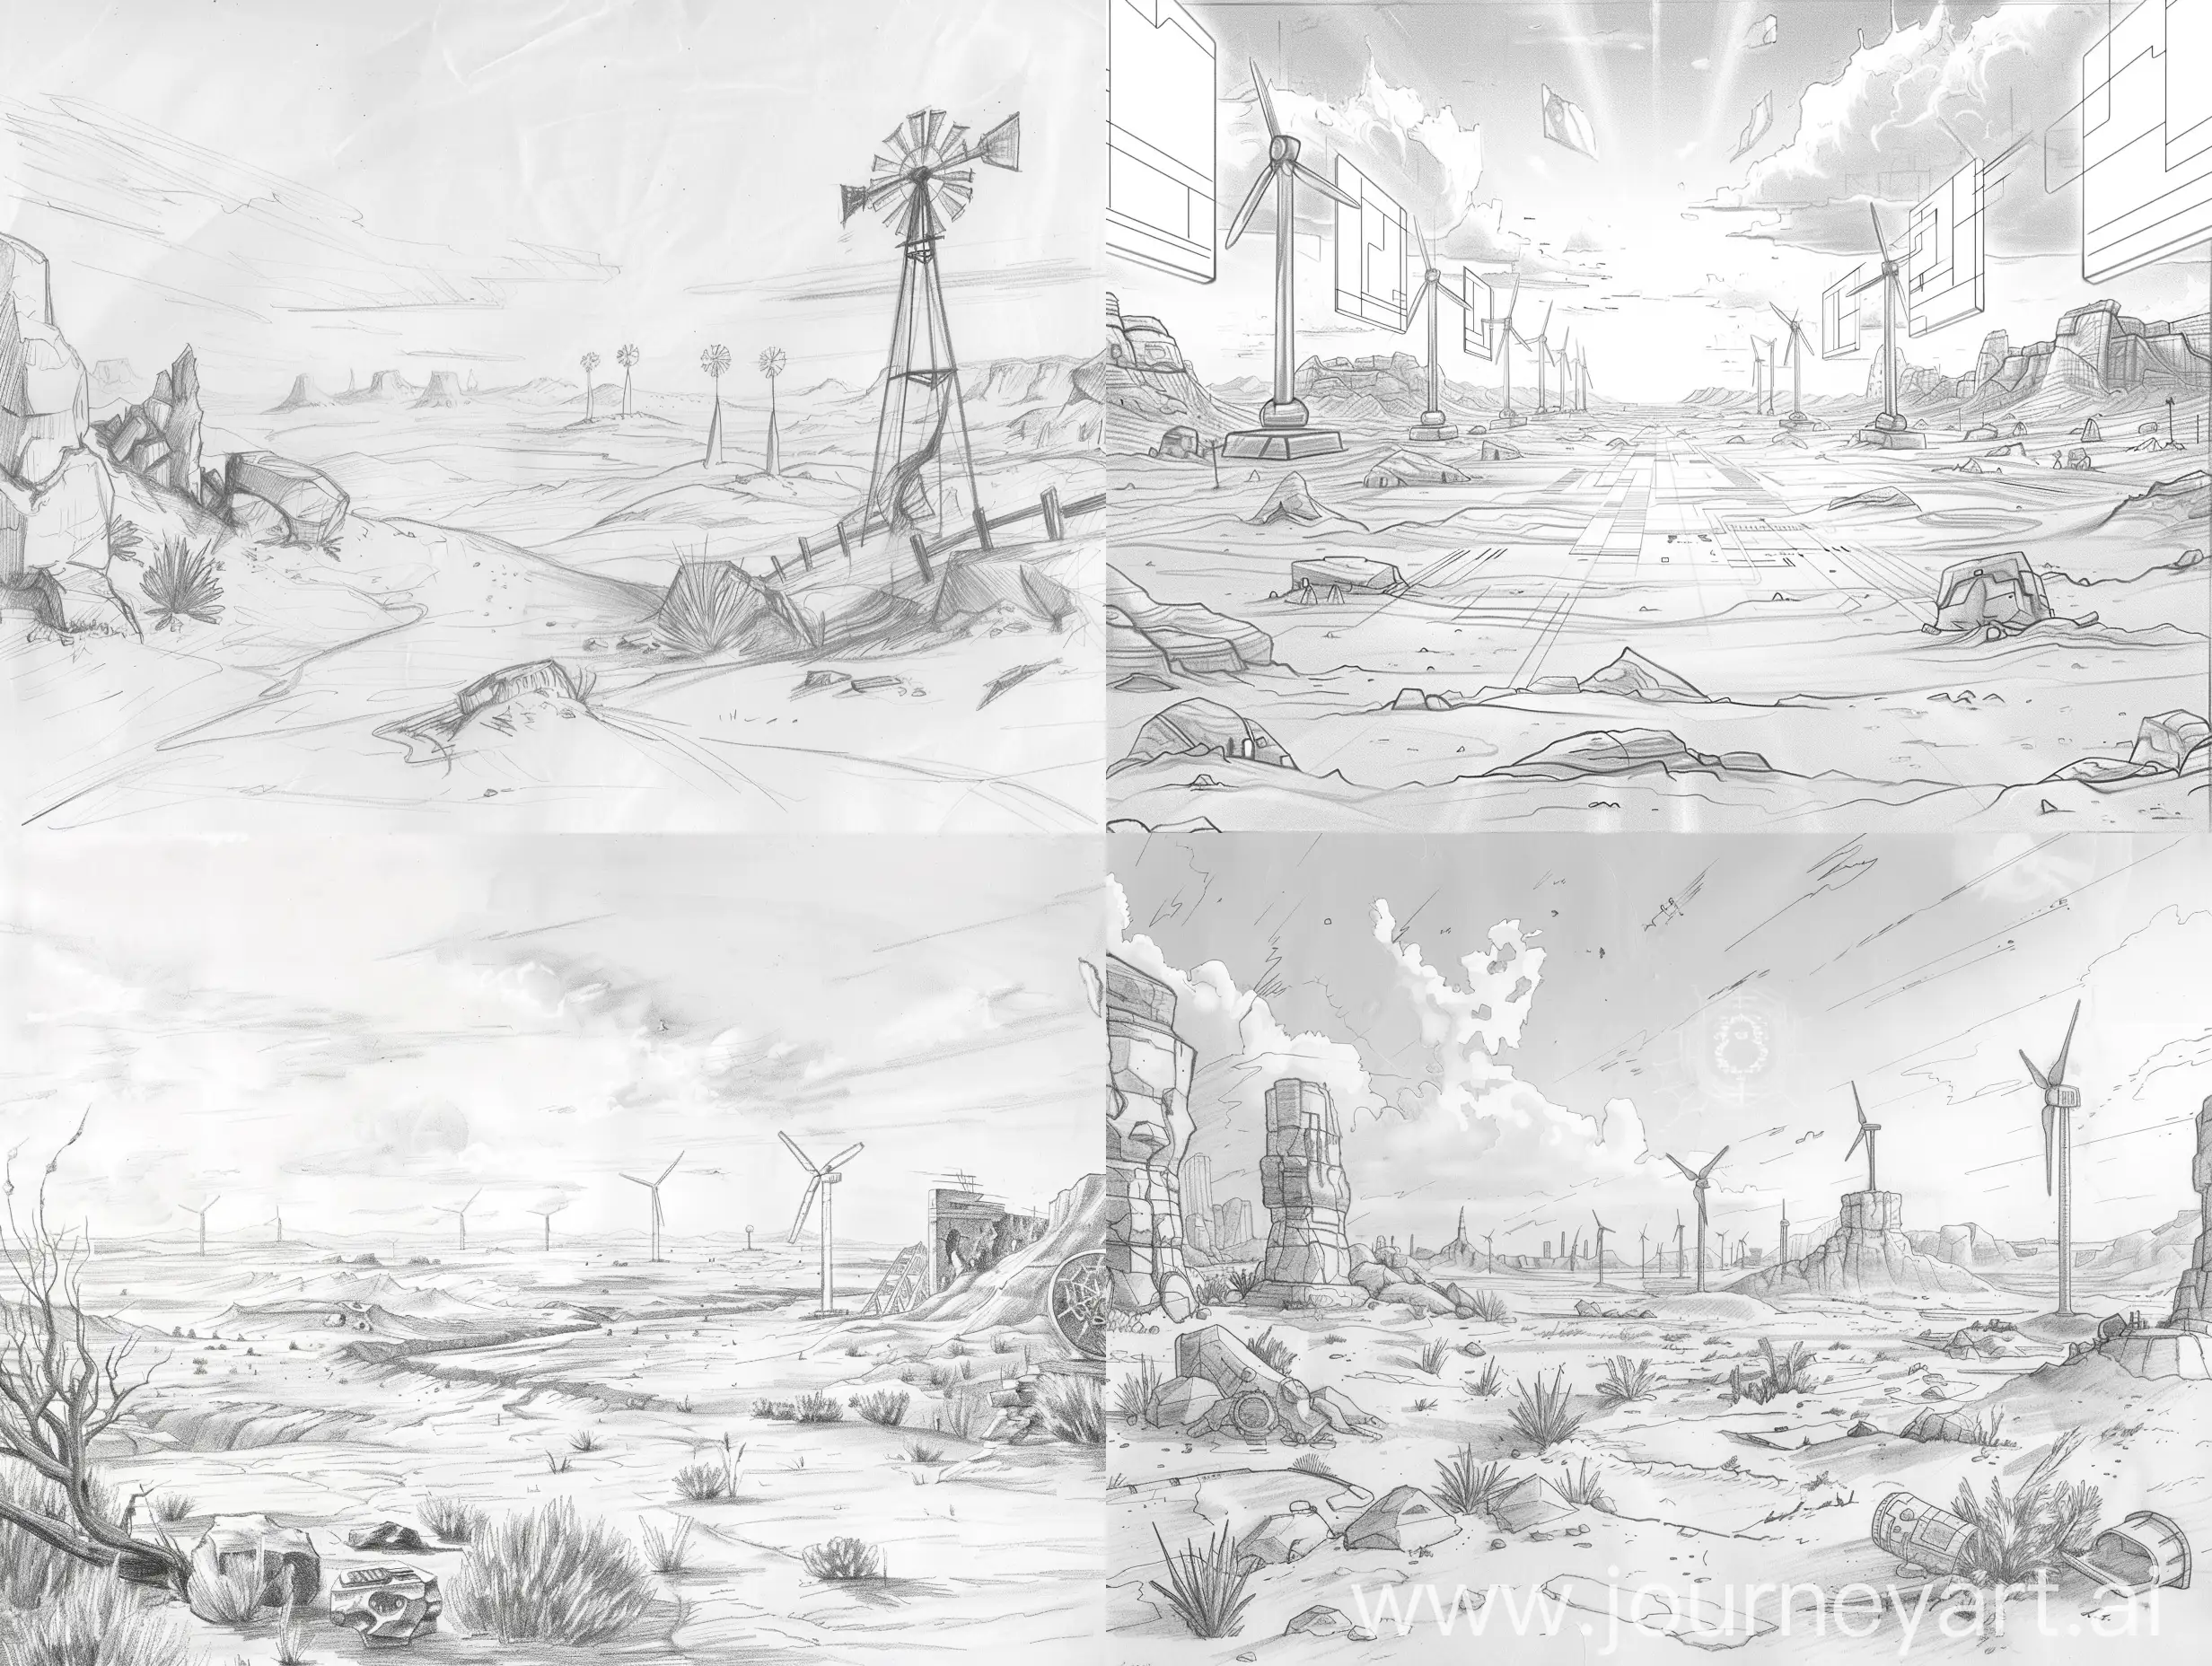 Futuristic-Cyberpunk-Wild-West-Sketch-Endless-Plains-and-Energy-Windmills